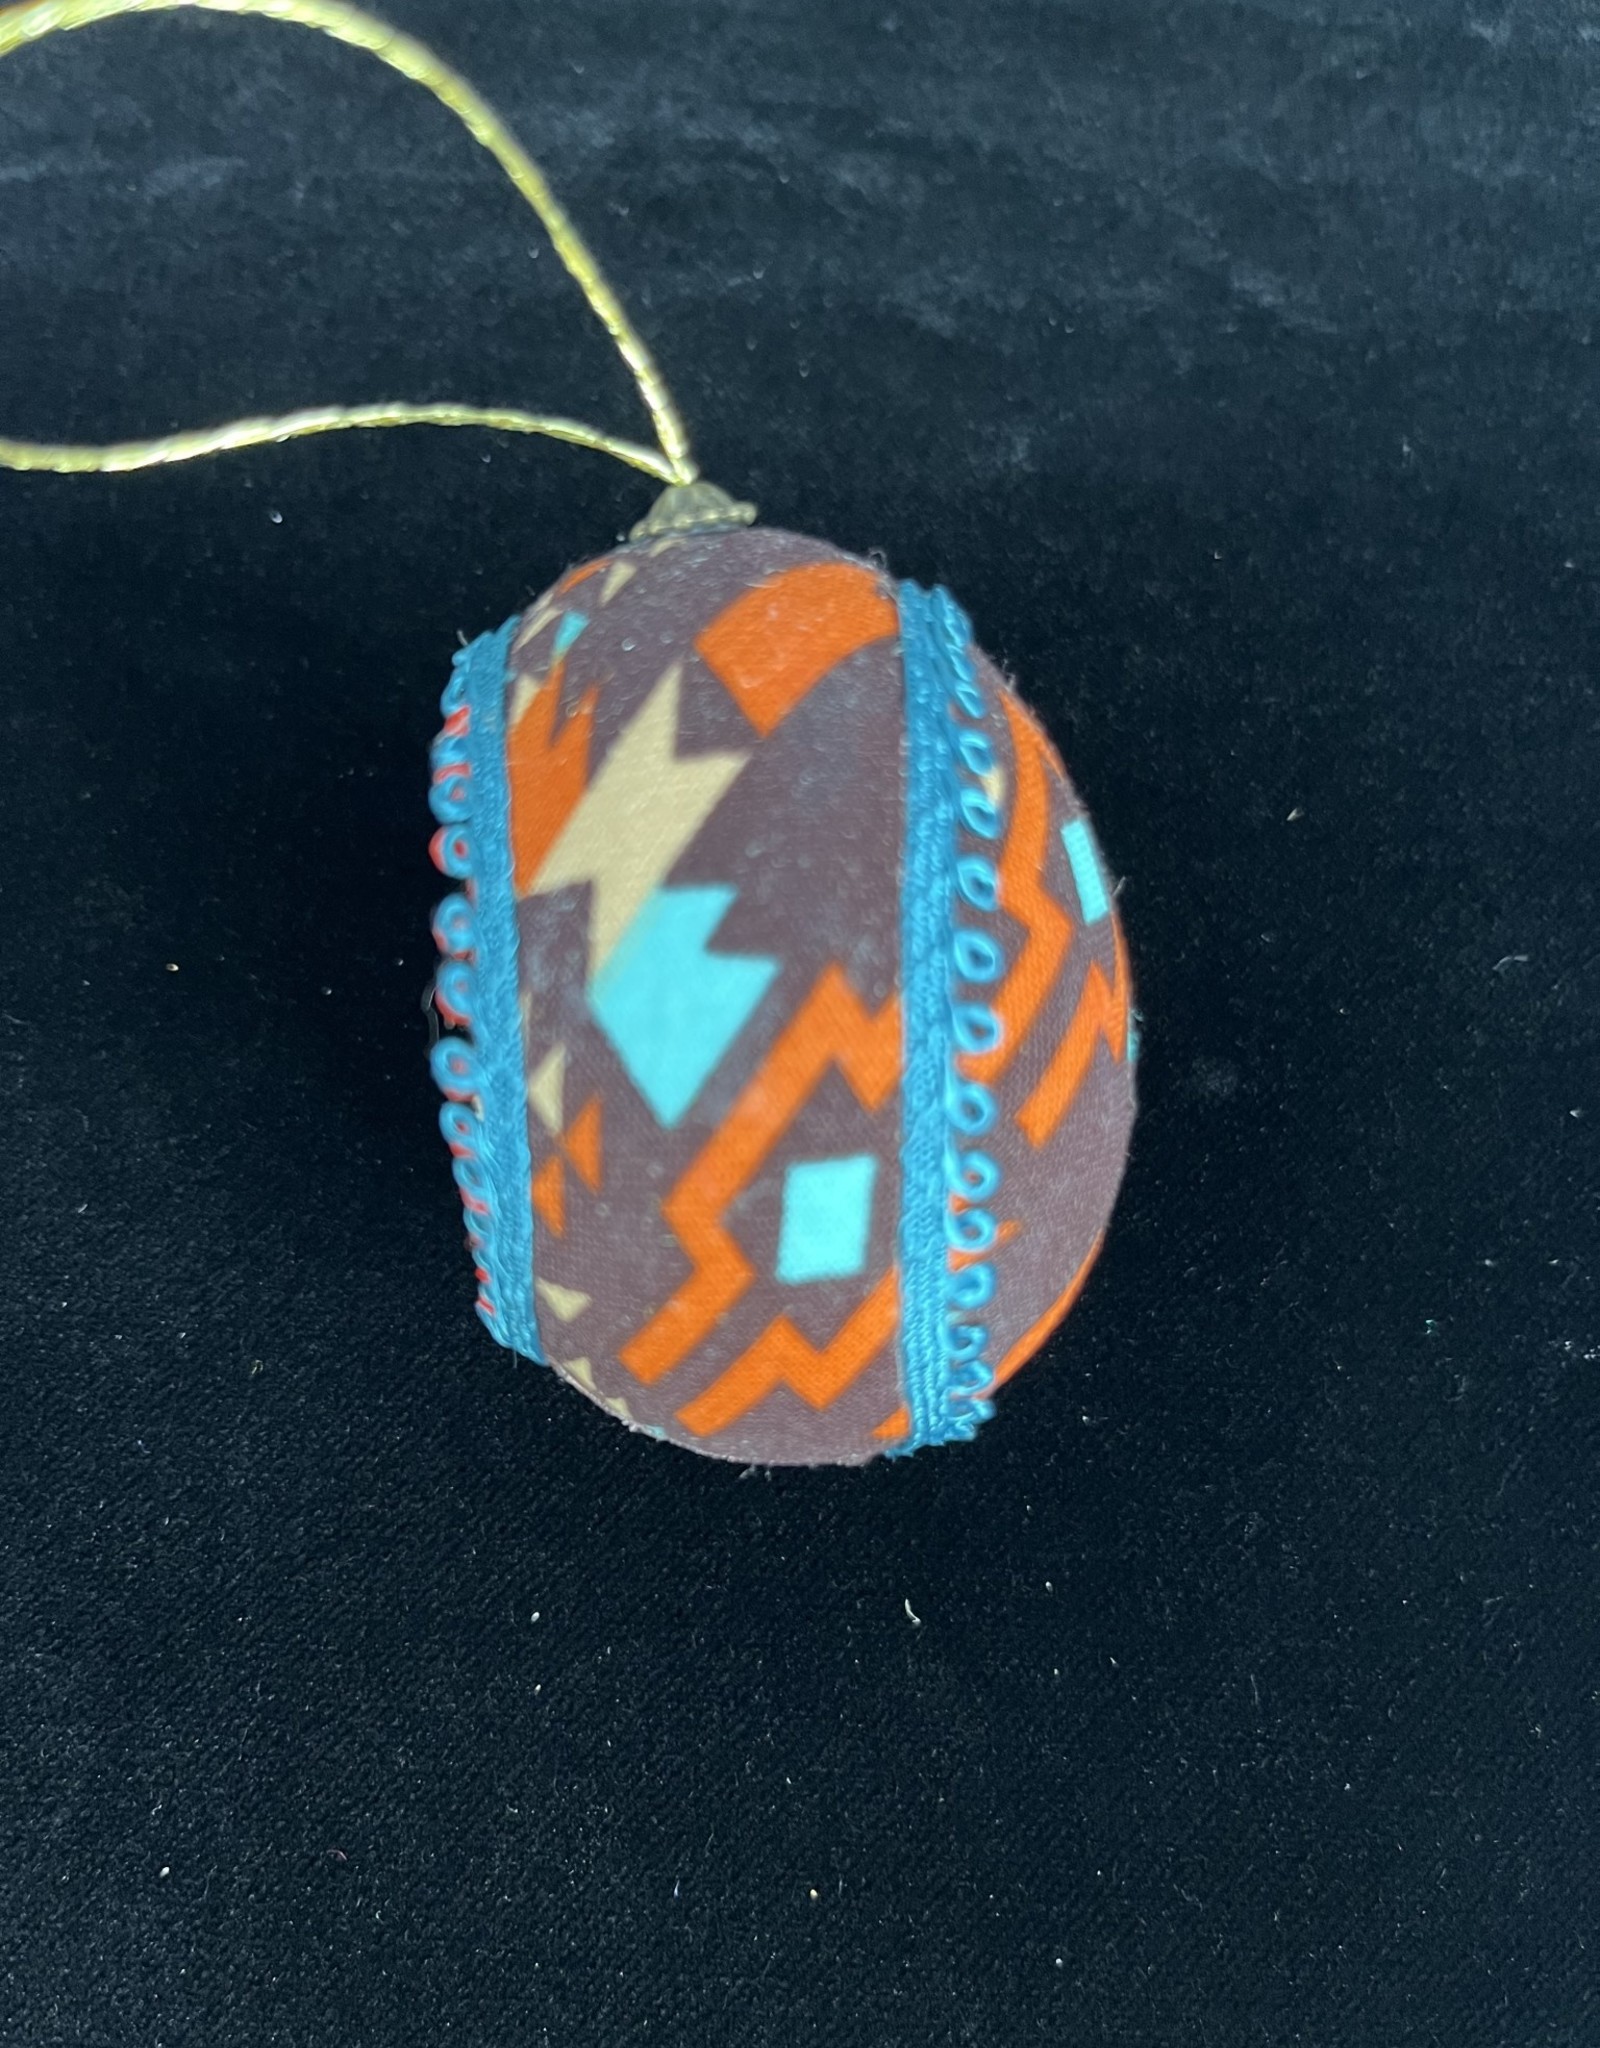 Ammi Brooks Southwest Coyote Real Egg Ornament